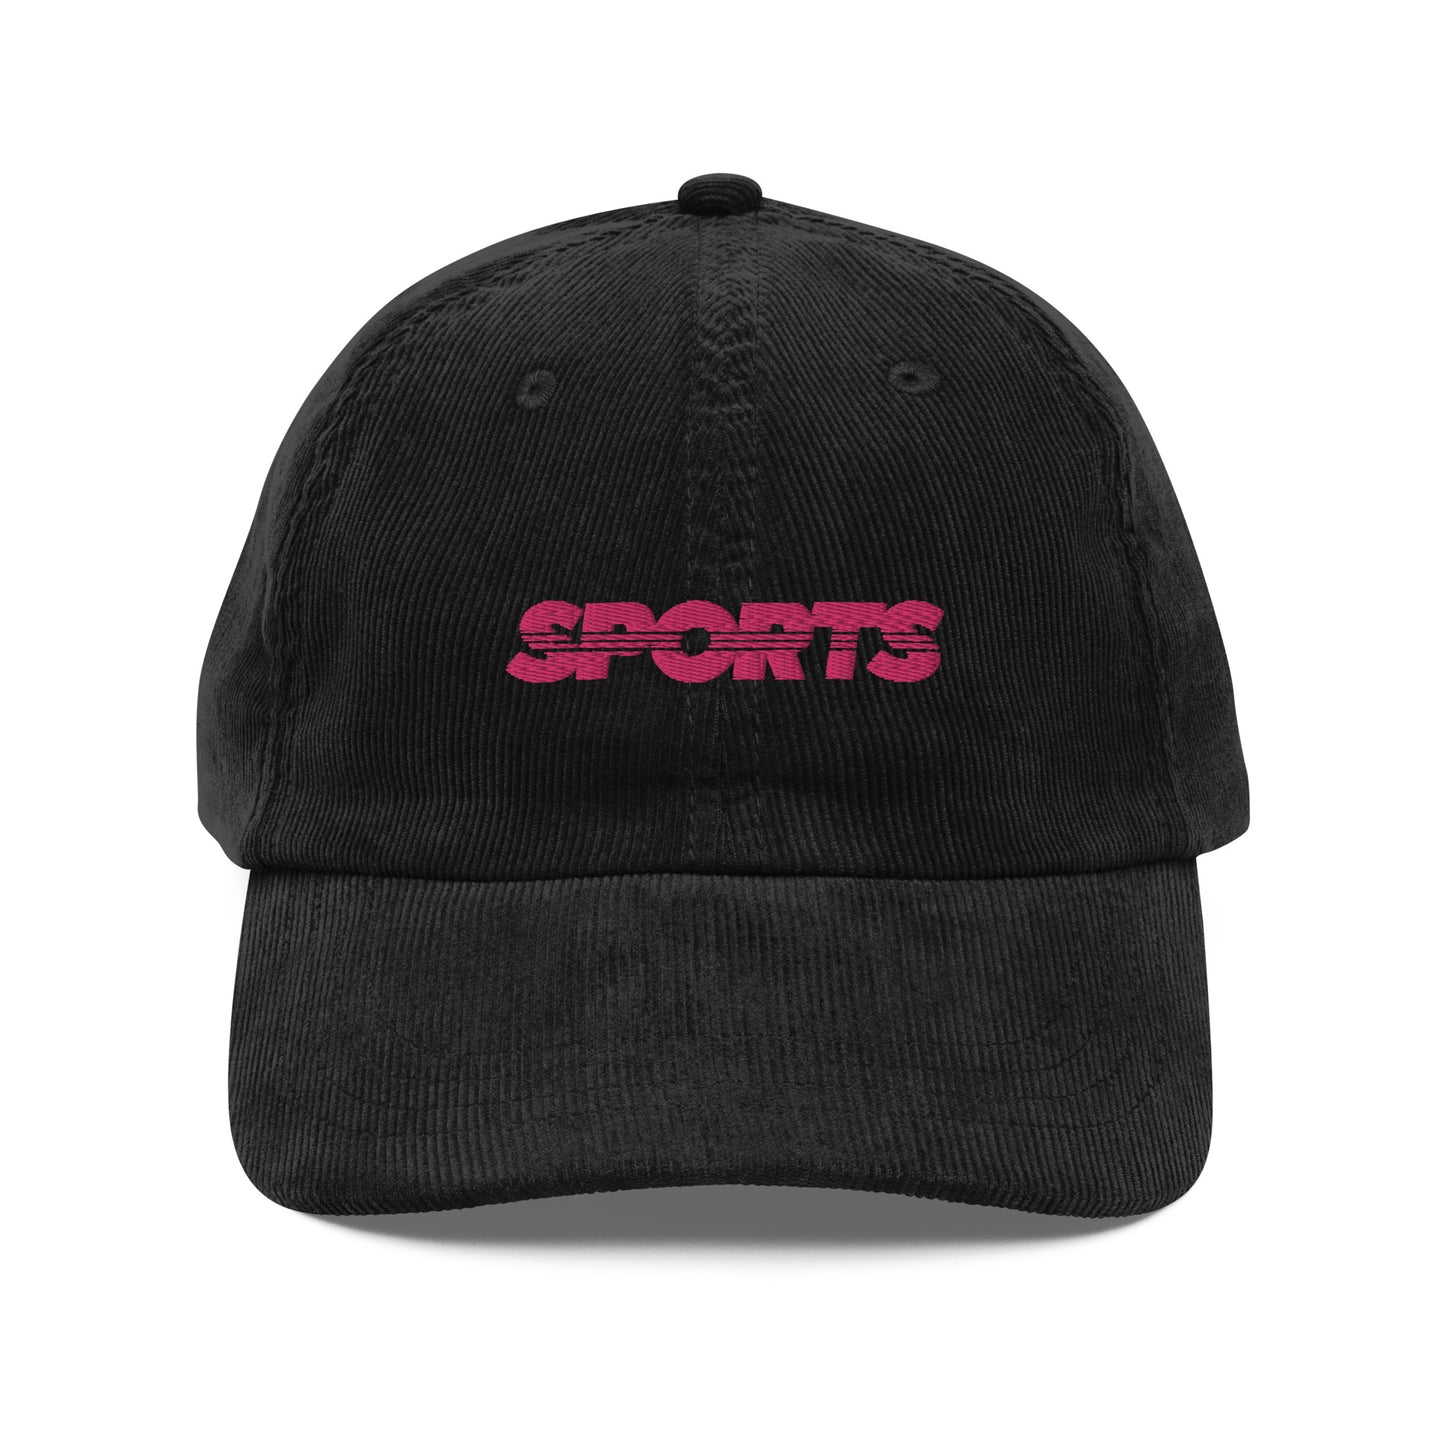 sports vintage corduroy cap